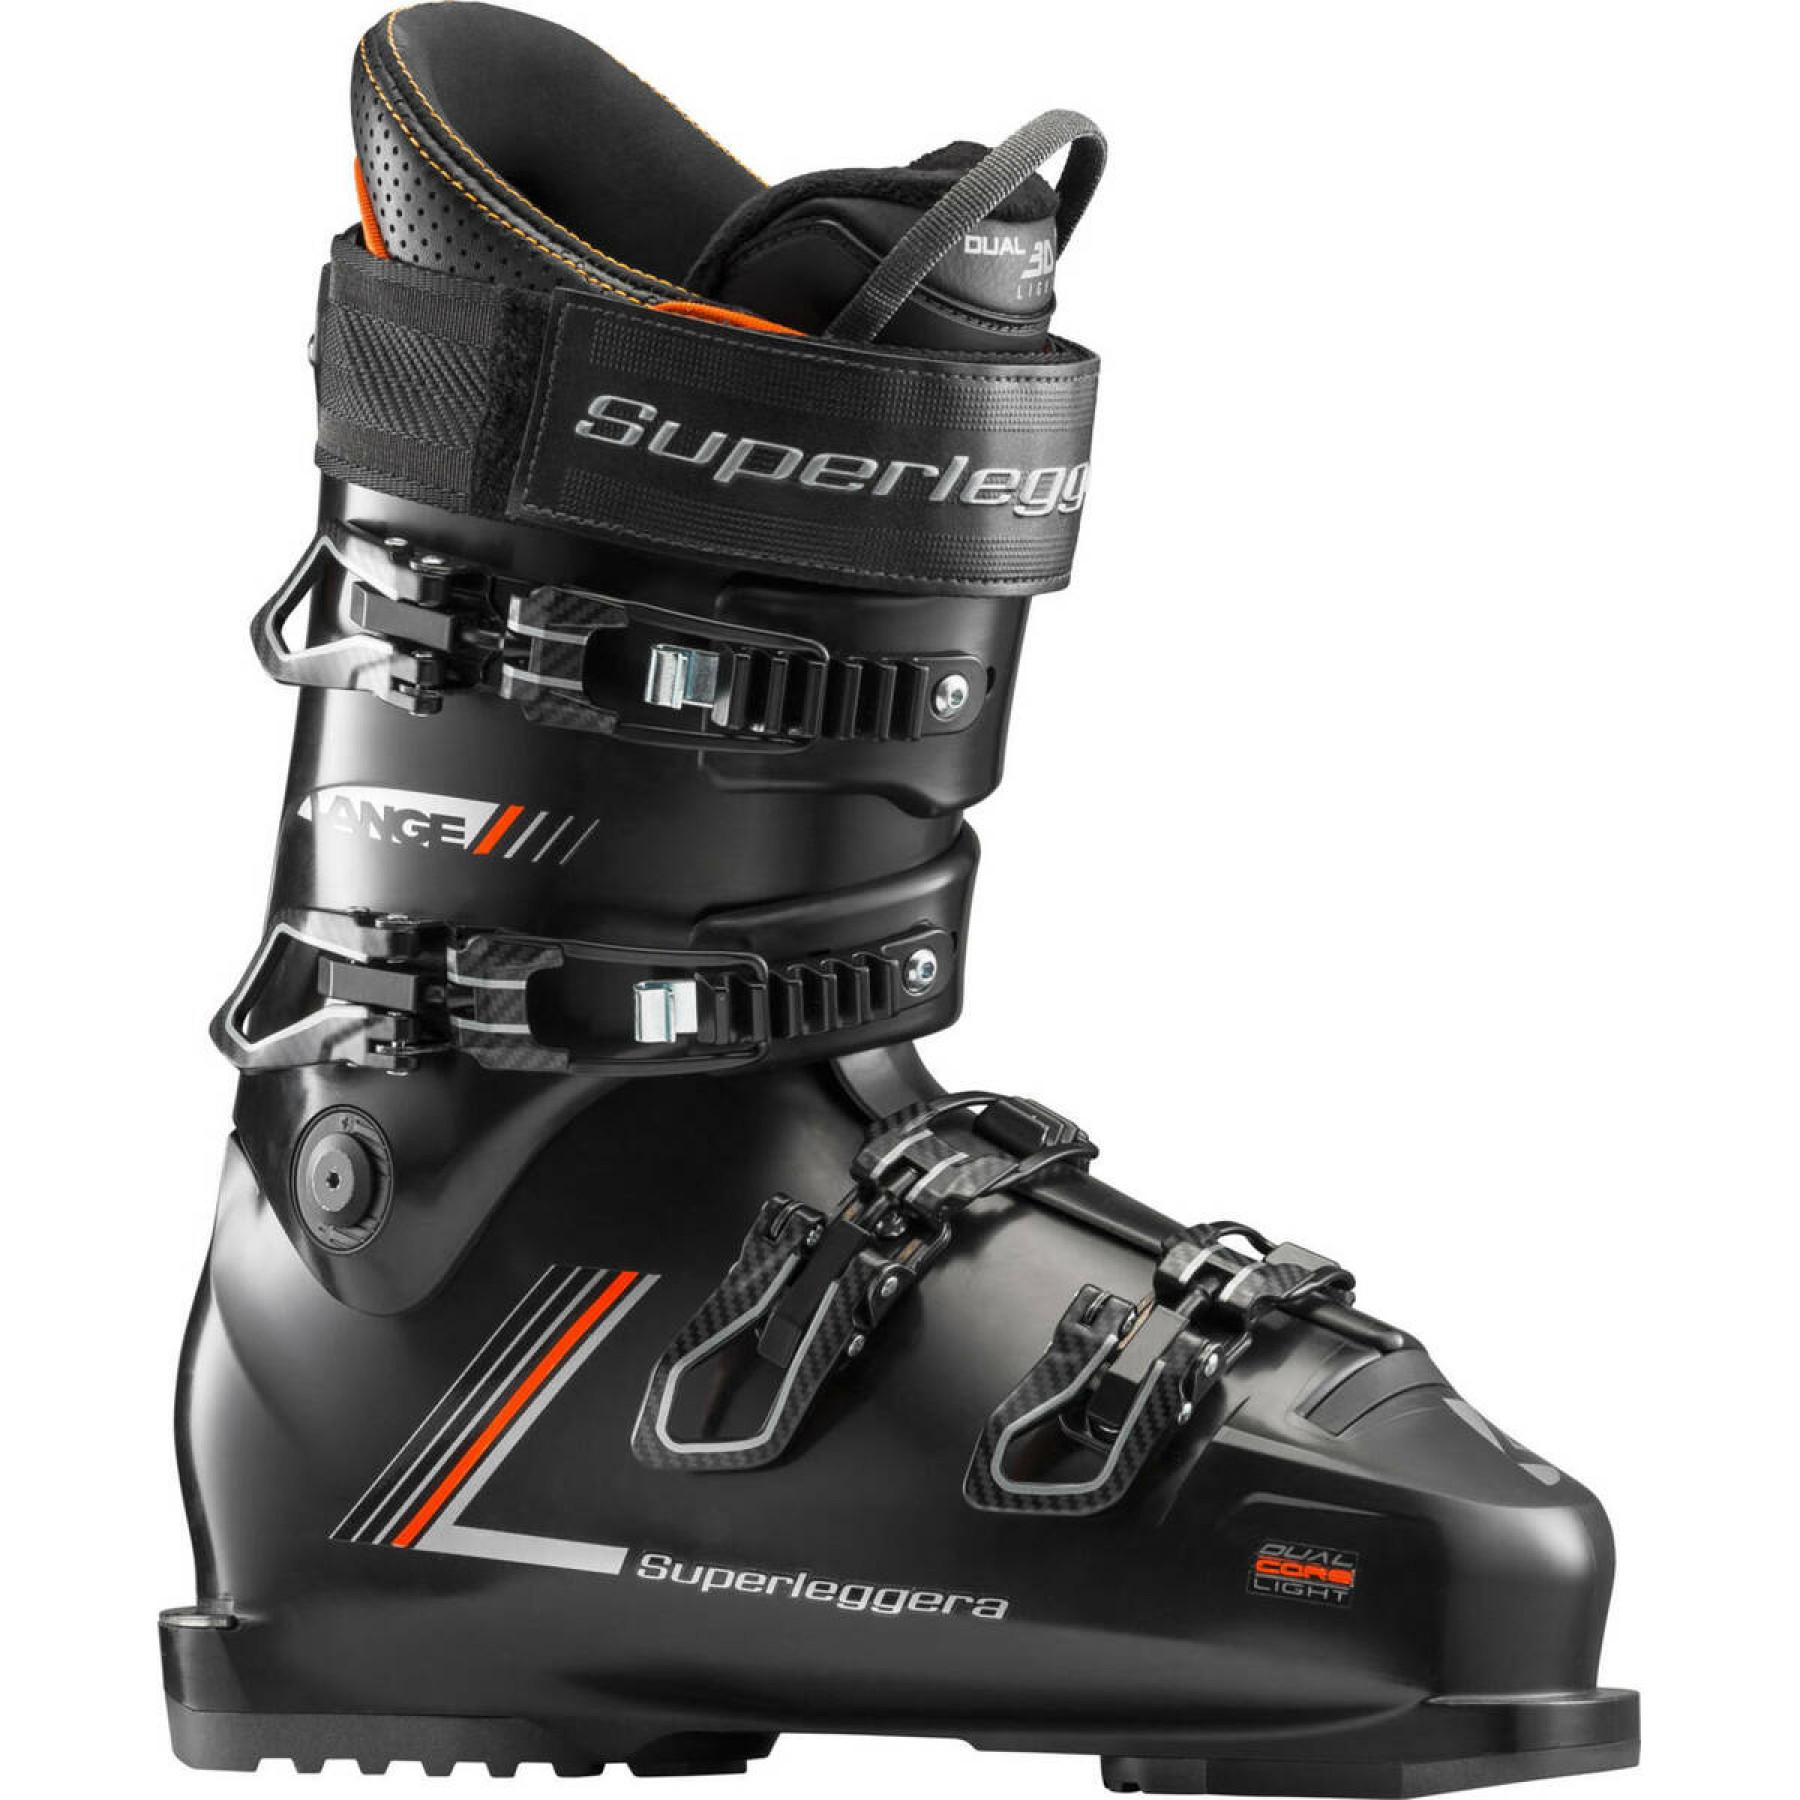 Chaussures de ski Lange rx superleggera